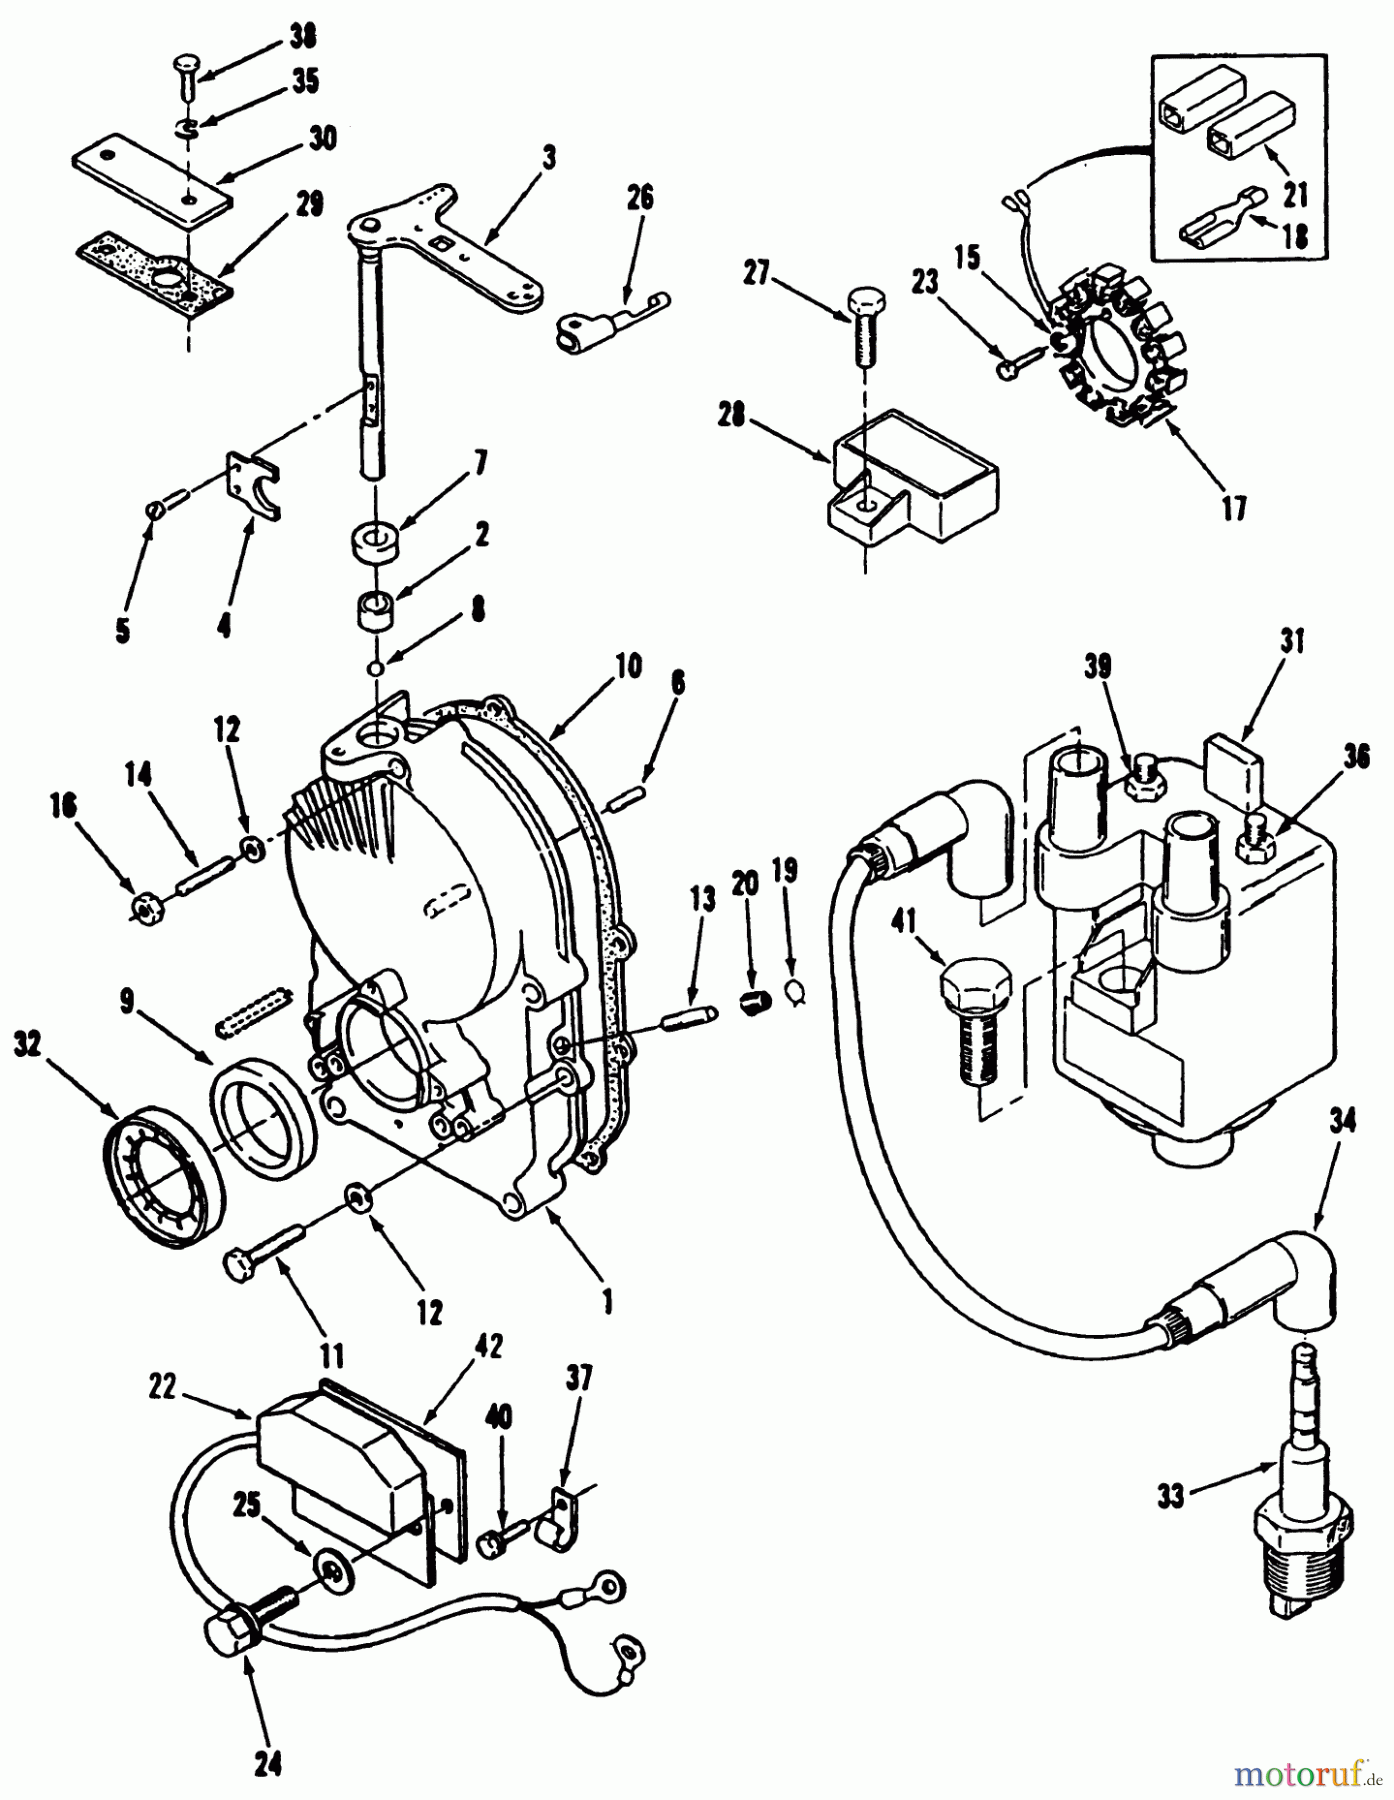  Toro Neu Mowers, Lawn & Garden Tractor Seite 1 31-10K803 (310-8) - Toro 310-8 Garden Tractor, 1992 (2000001-2999999) GEARCASE AND IGNITION CONTROLS POWER PLUS